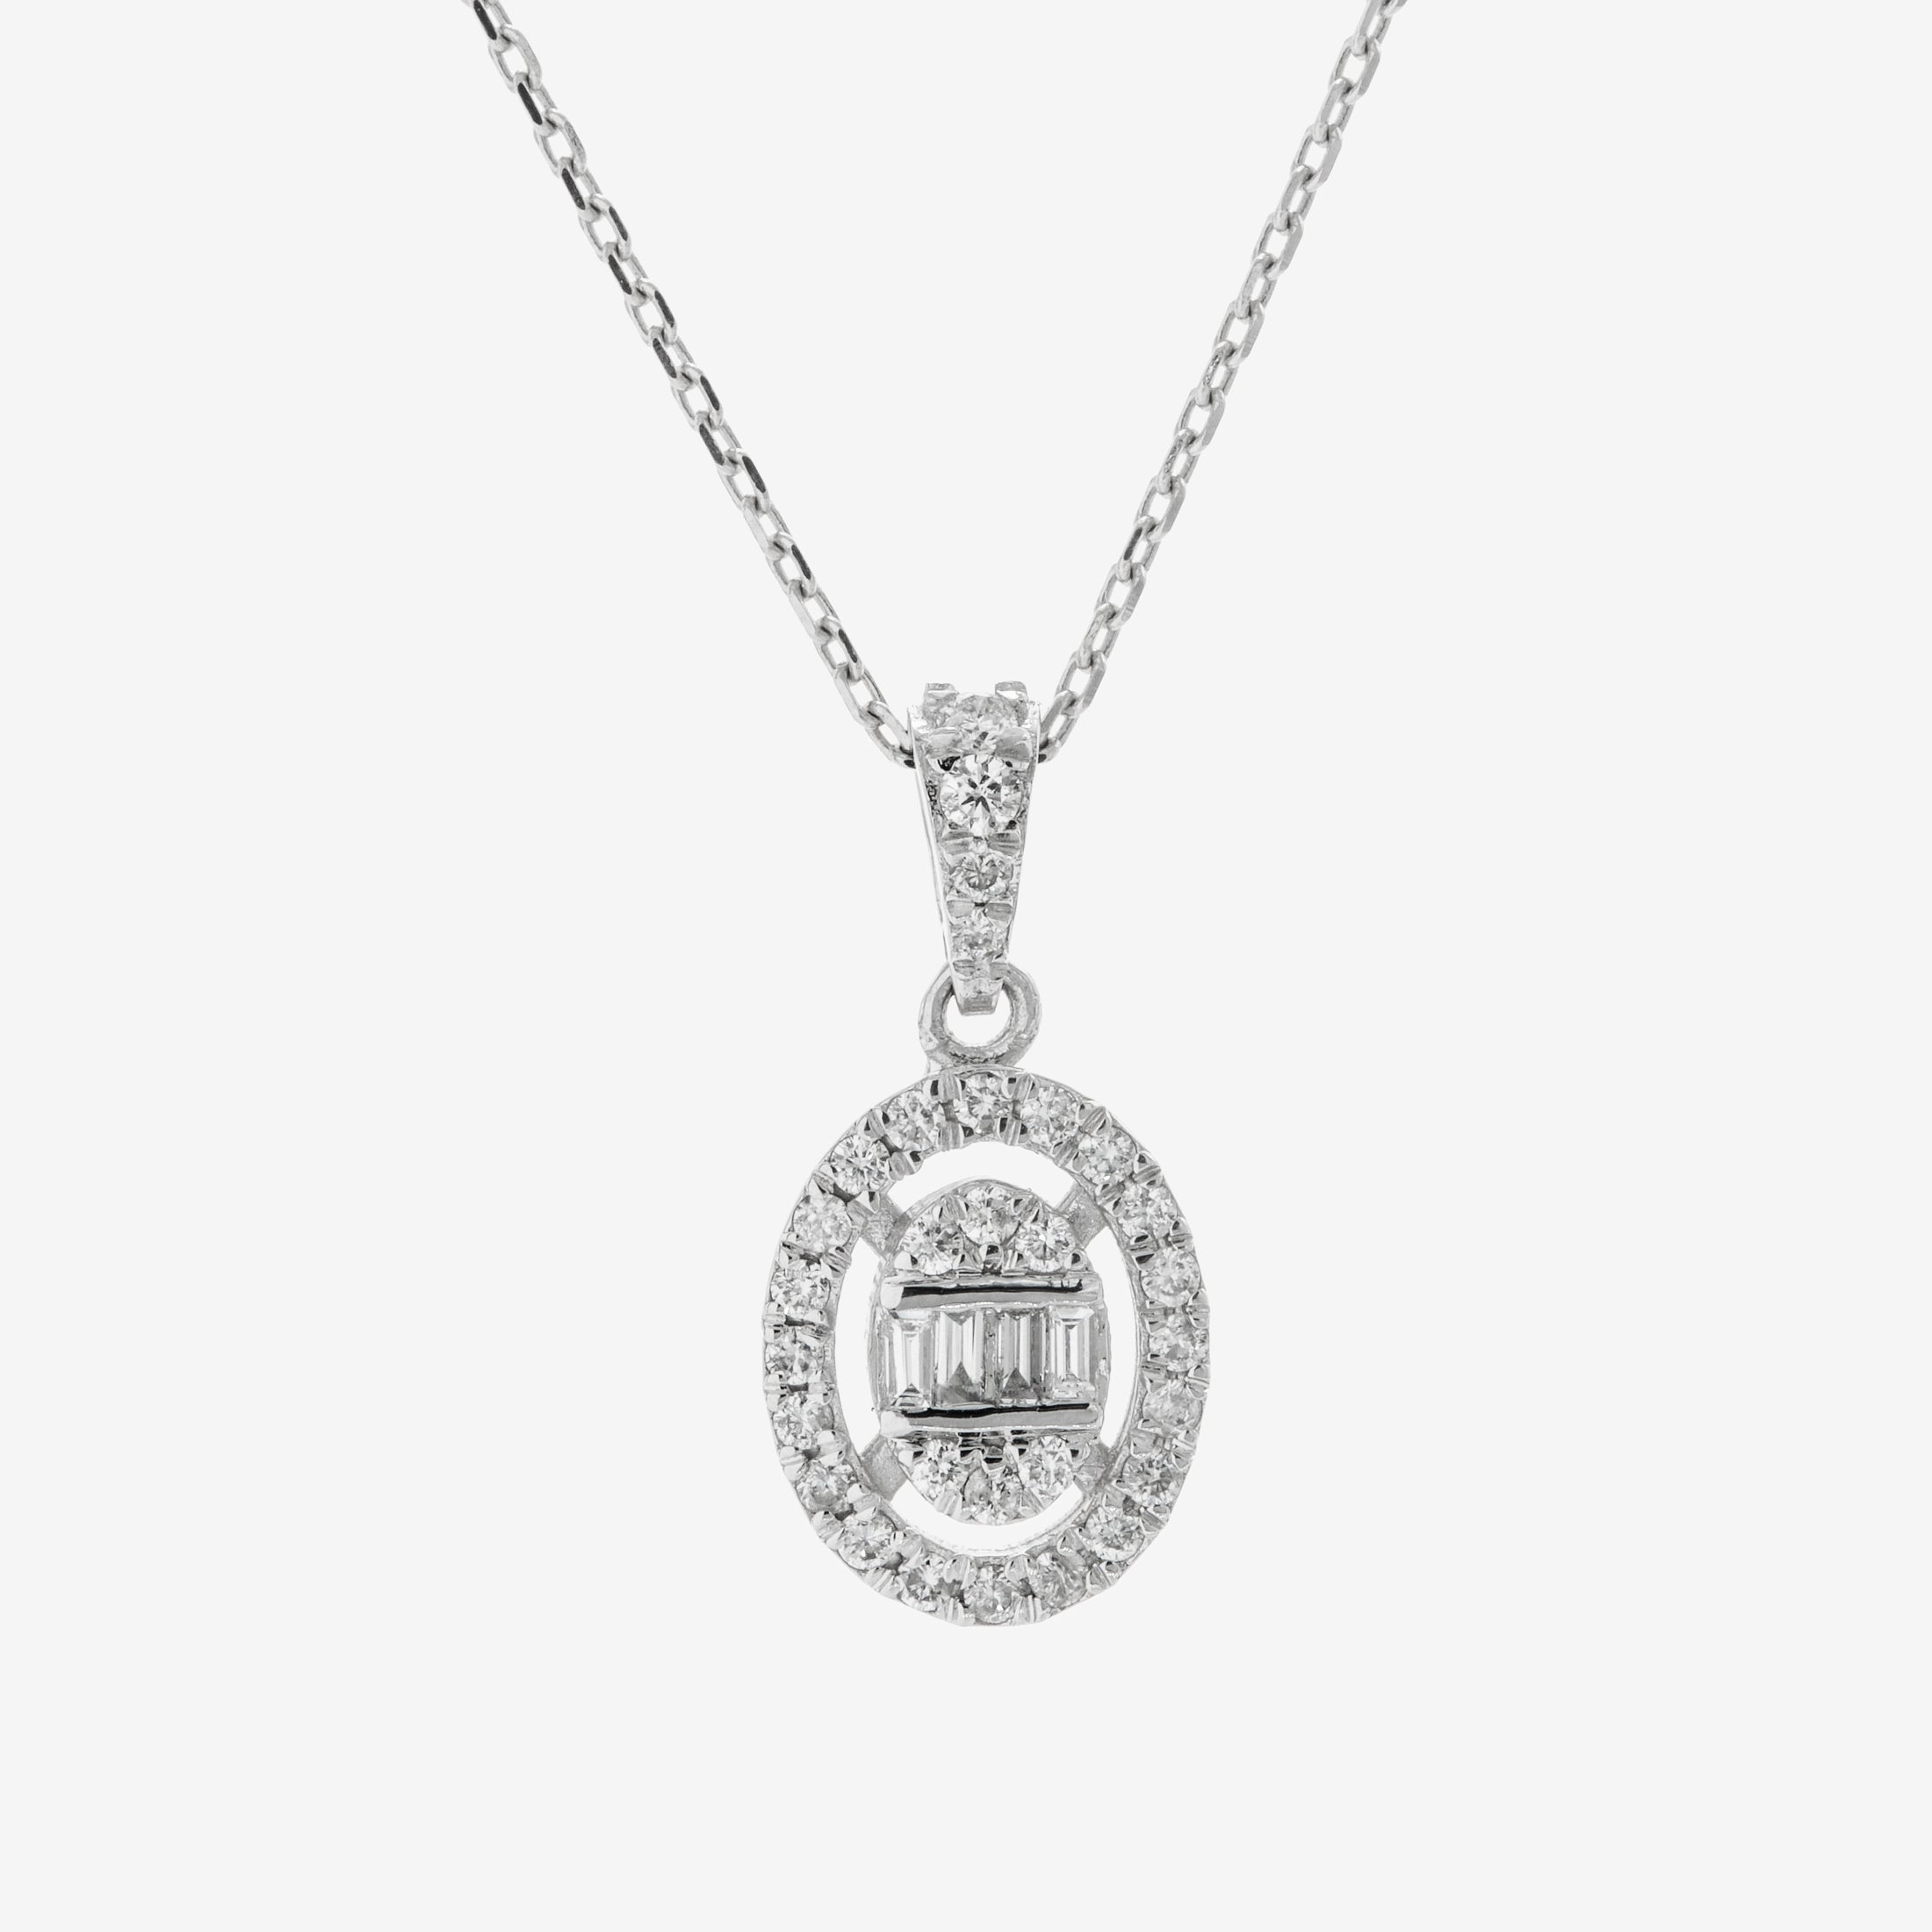 Chavez necklace with diamonds